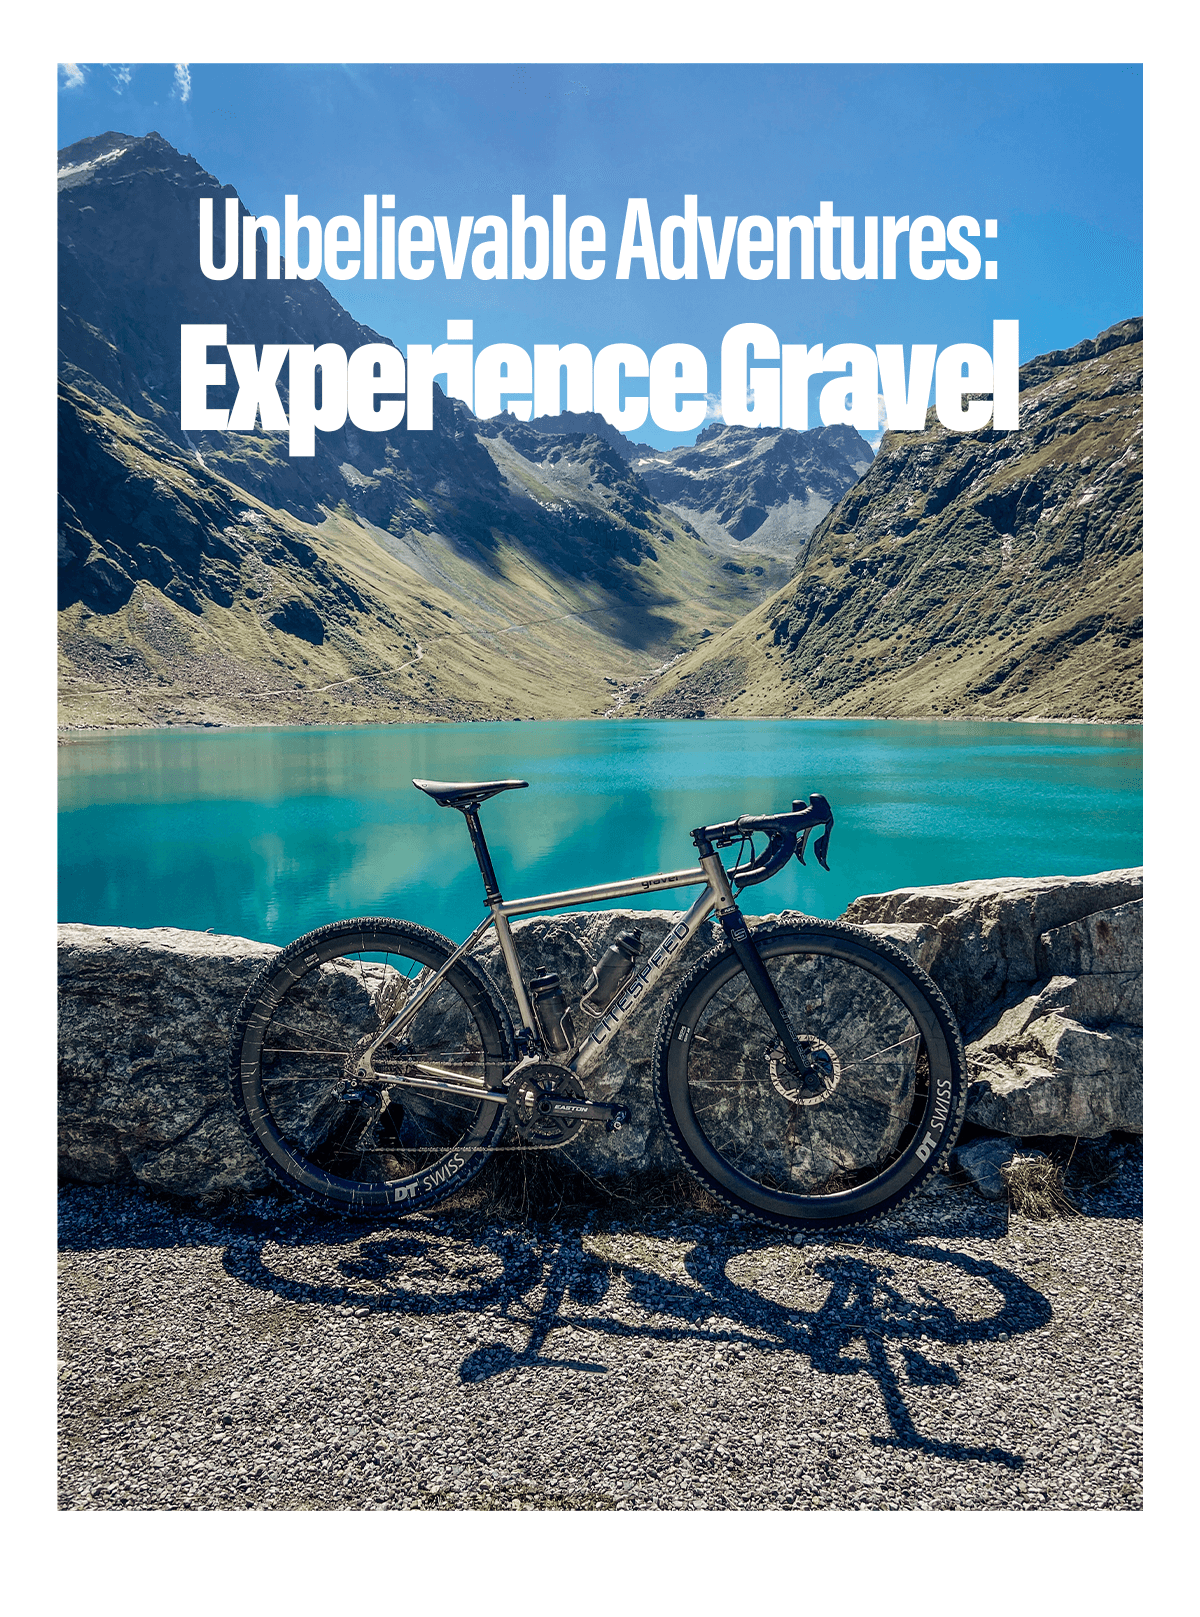 Unbelievable Adventures, Experienced on Gravel